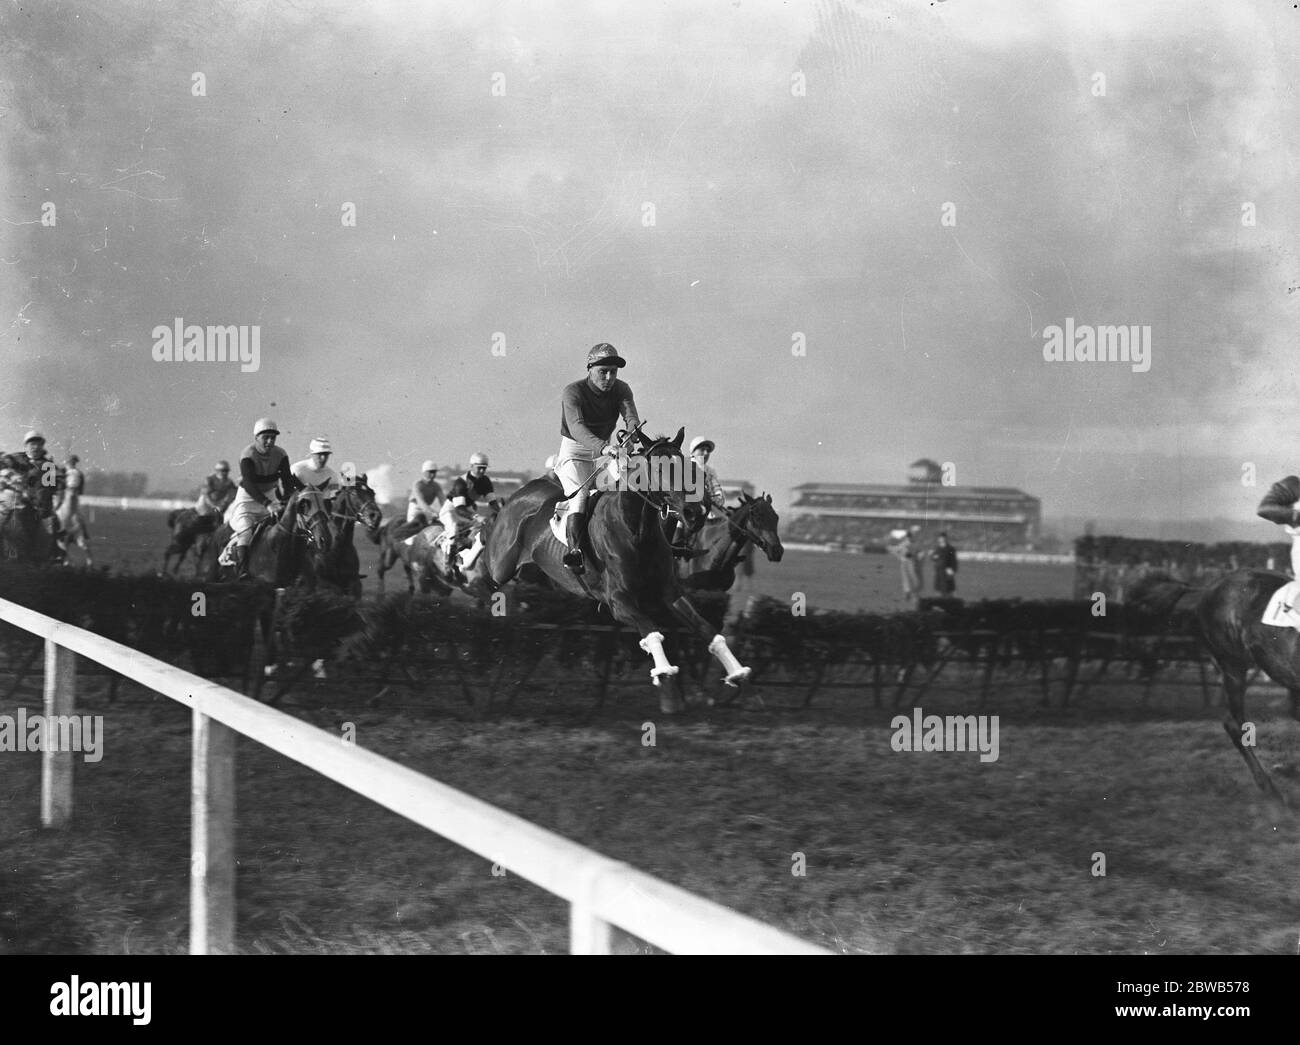 Bei den Newbury Races nimmt "Skills" unter D McCann die Hürden in Führung. Dezember 1926 Stockfoto